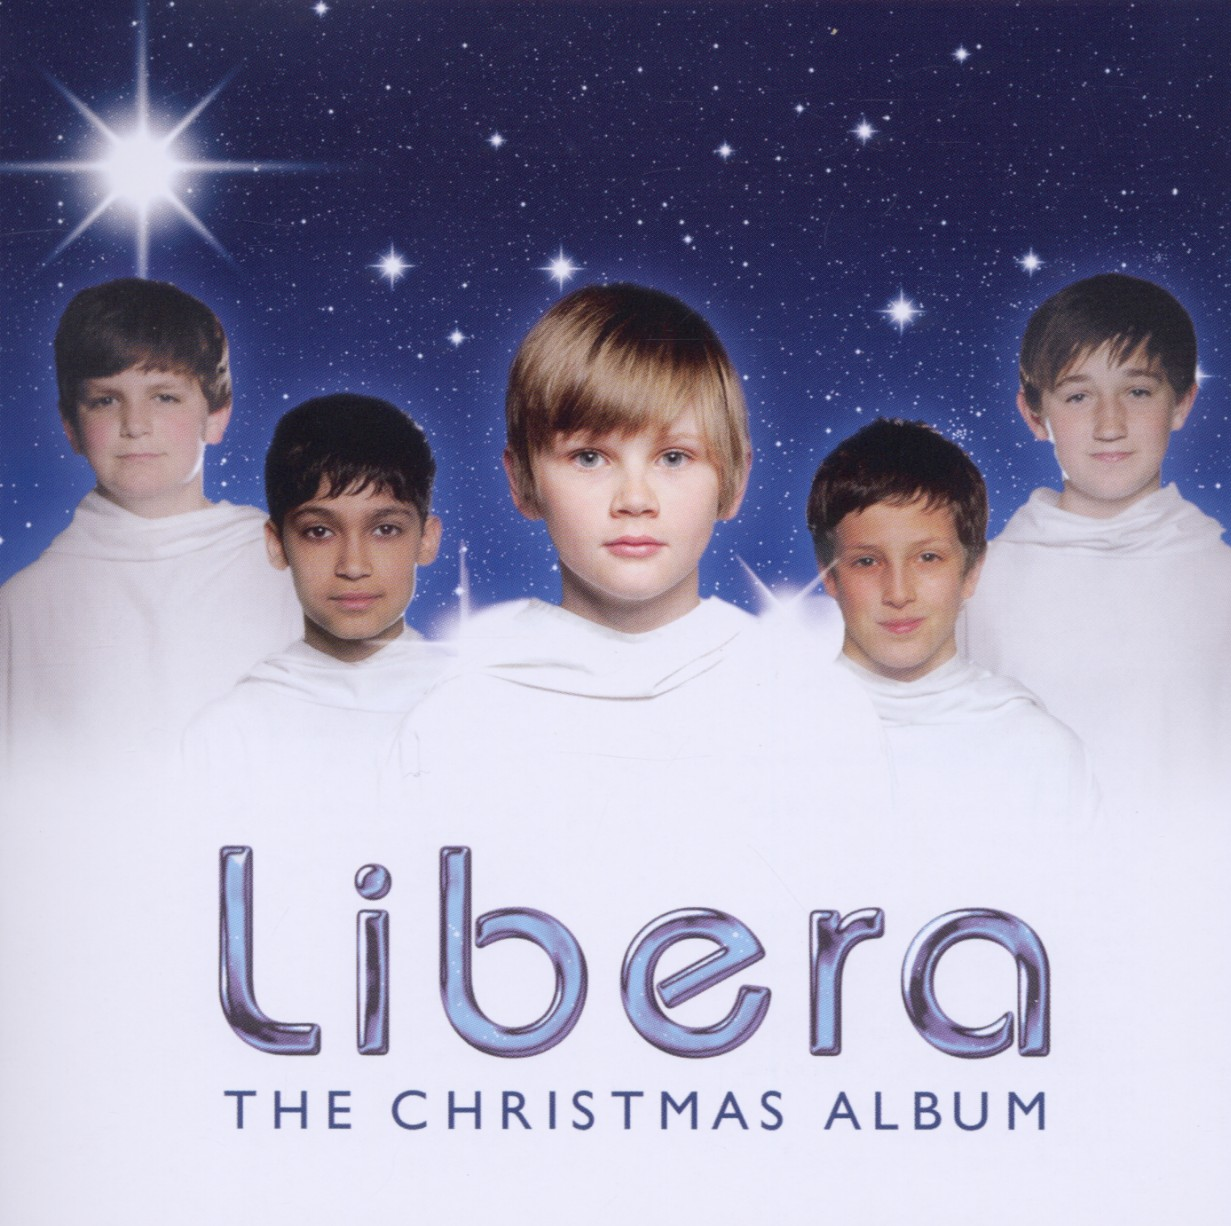 Libera/Prizeman - Christmas (CD) - Libera: Album The